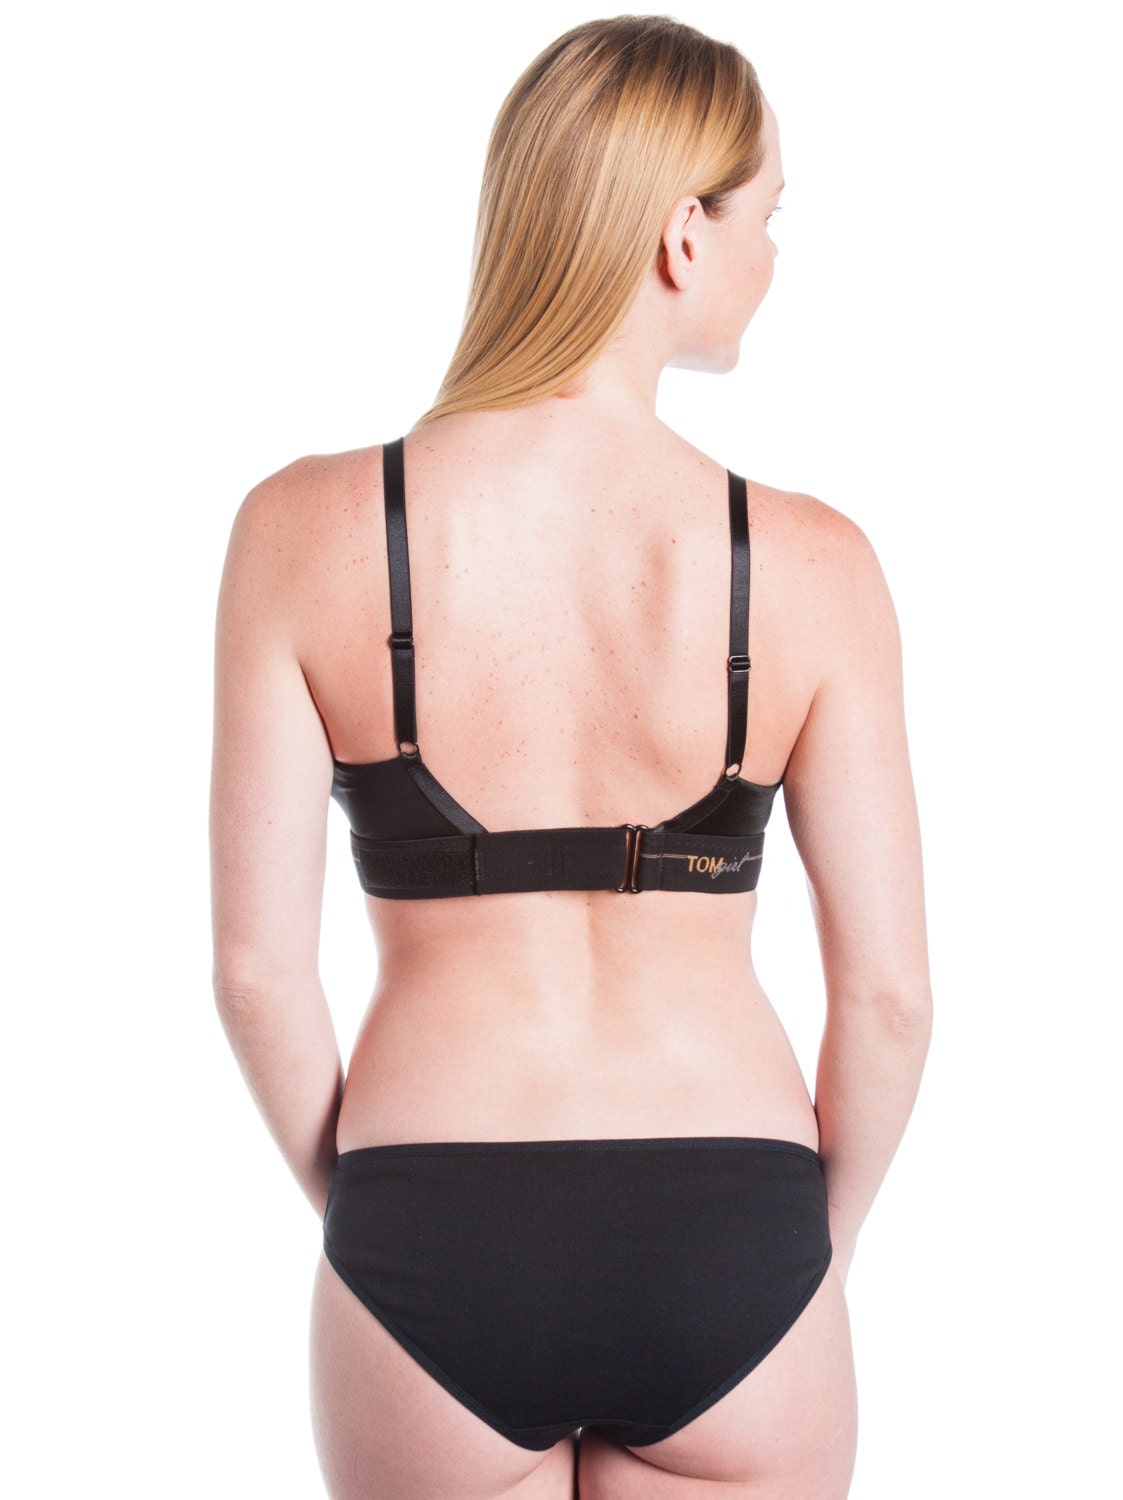 38B Black Bralette, Sports Bra Athletic Fit, Yoga Wear, Women's Lingerie,  Wireless Support Bra, Bra for Small Breasts, Supportive Bralette -   Canada